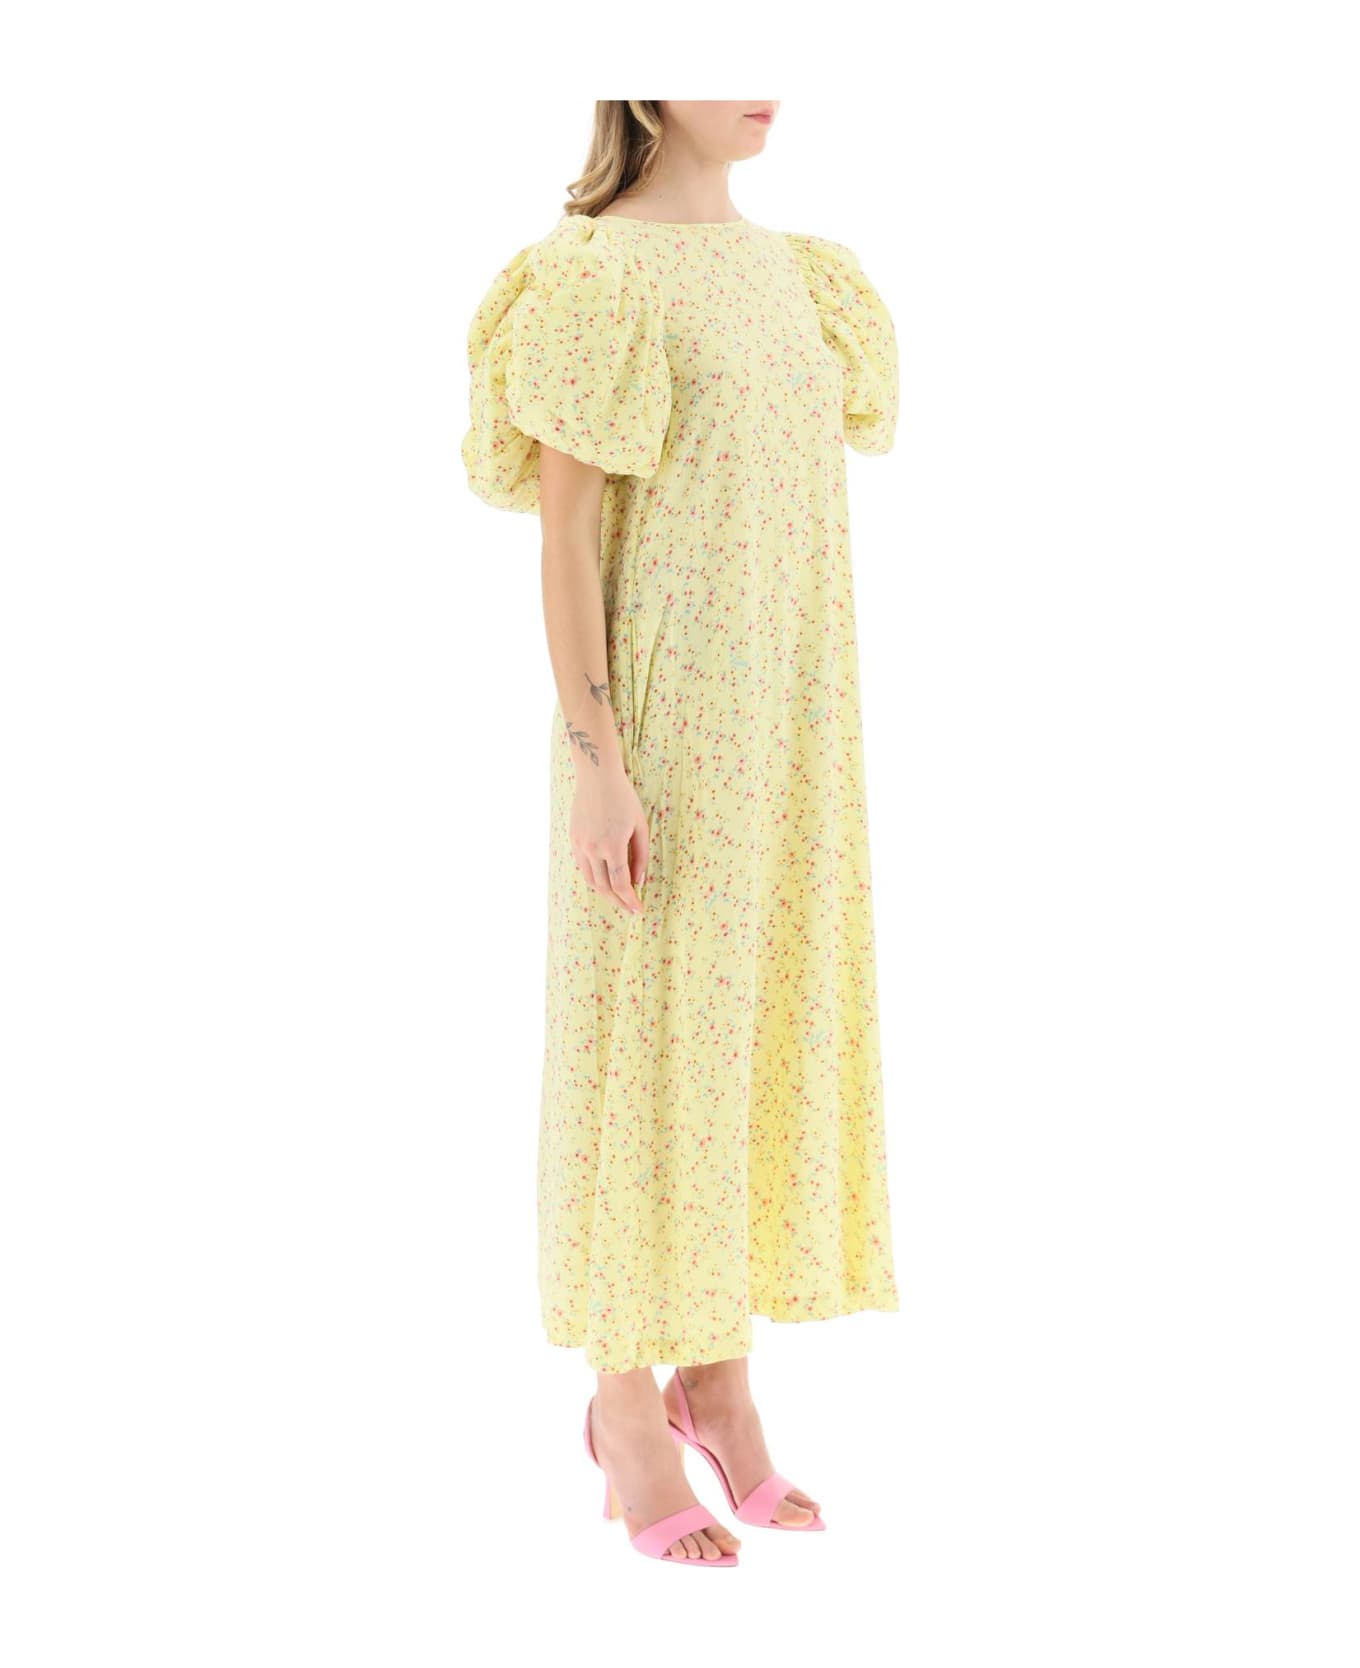 Rotate by Birger Christensen 'duddy' Jacquard Dress - YELLOW PEAR (Yellow)